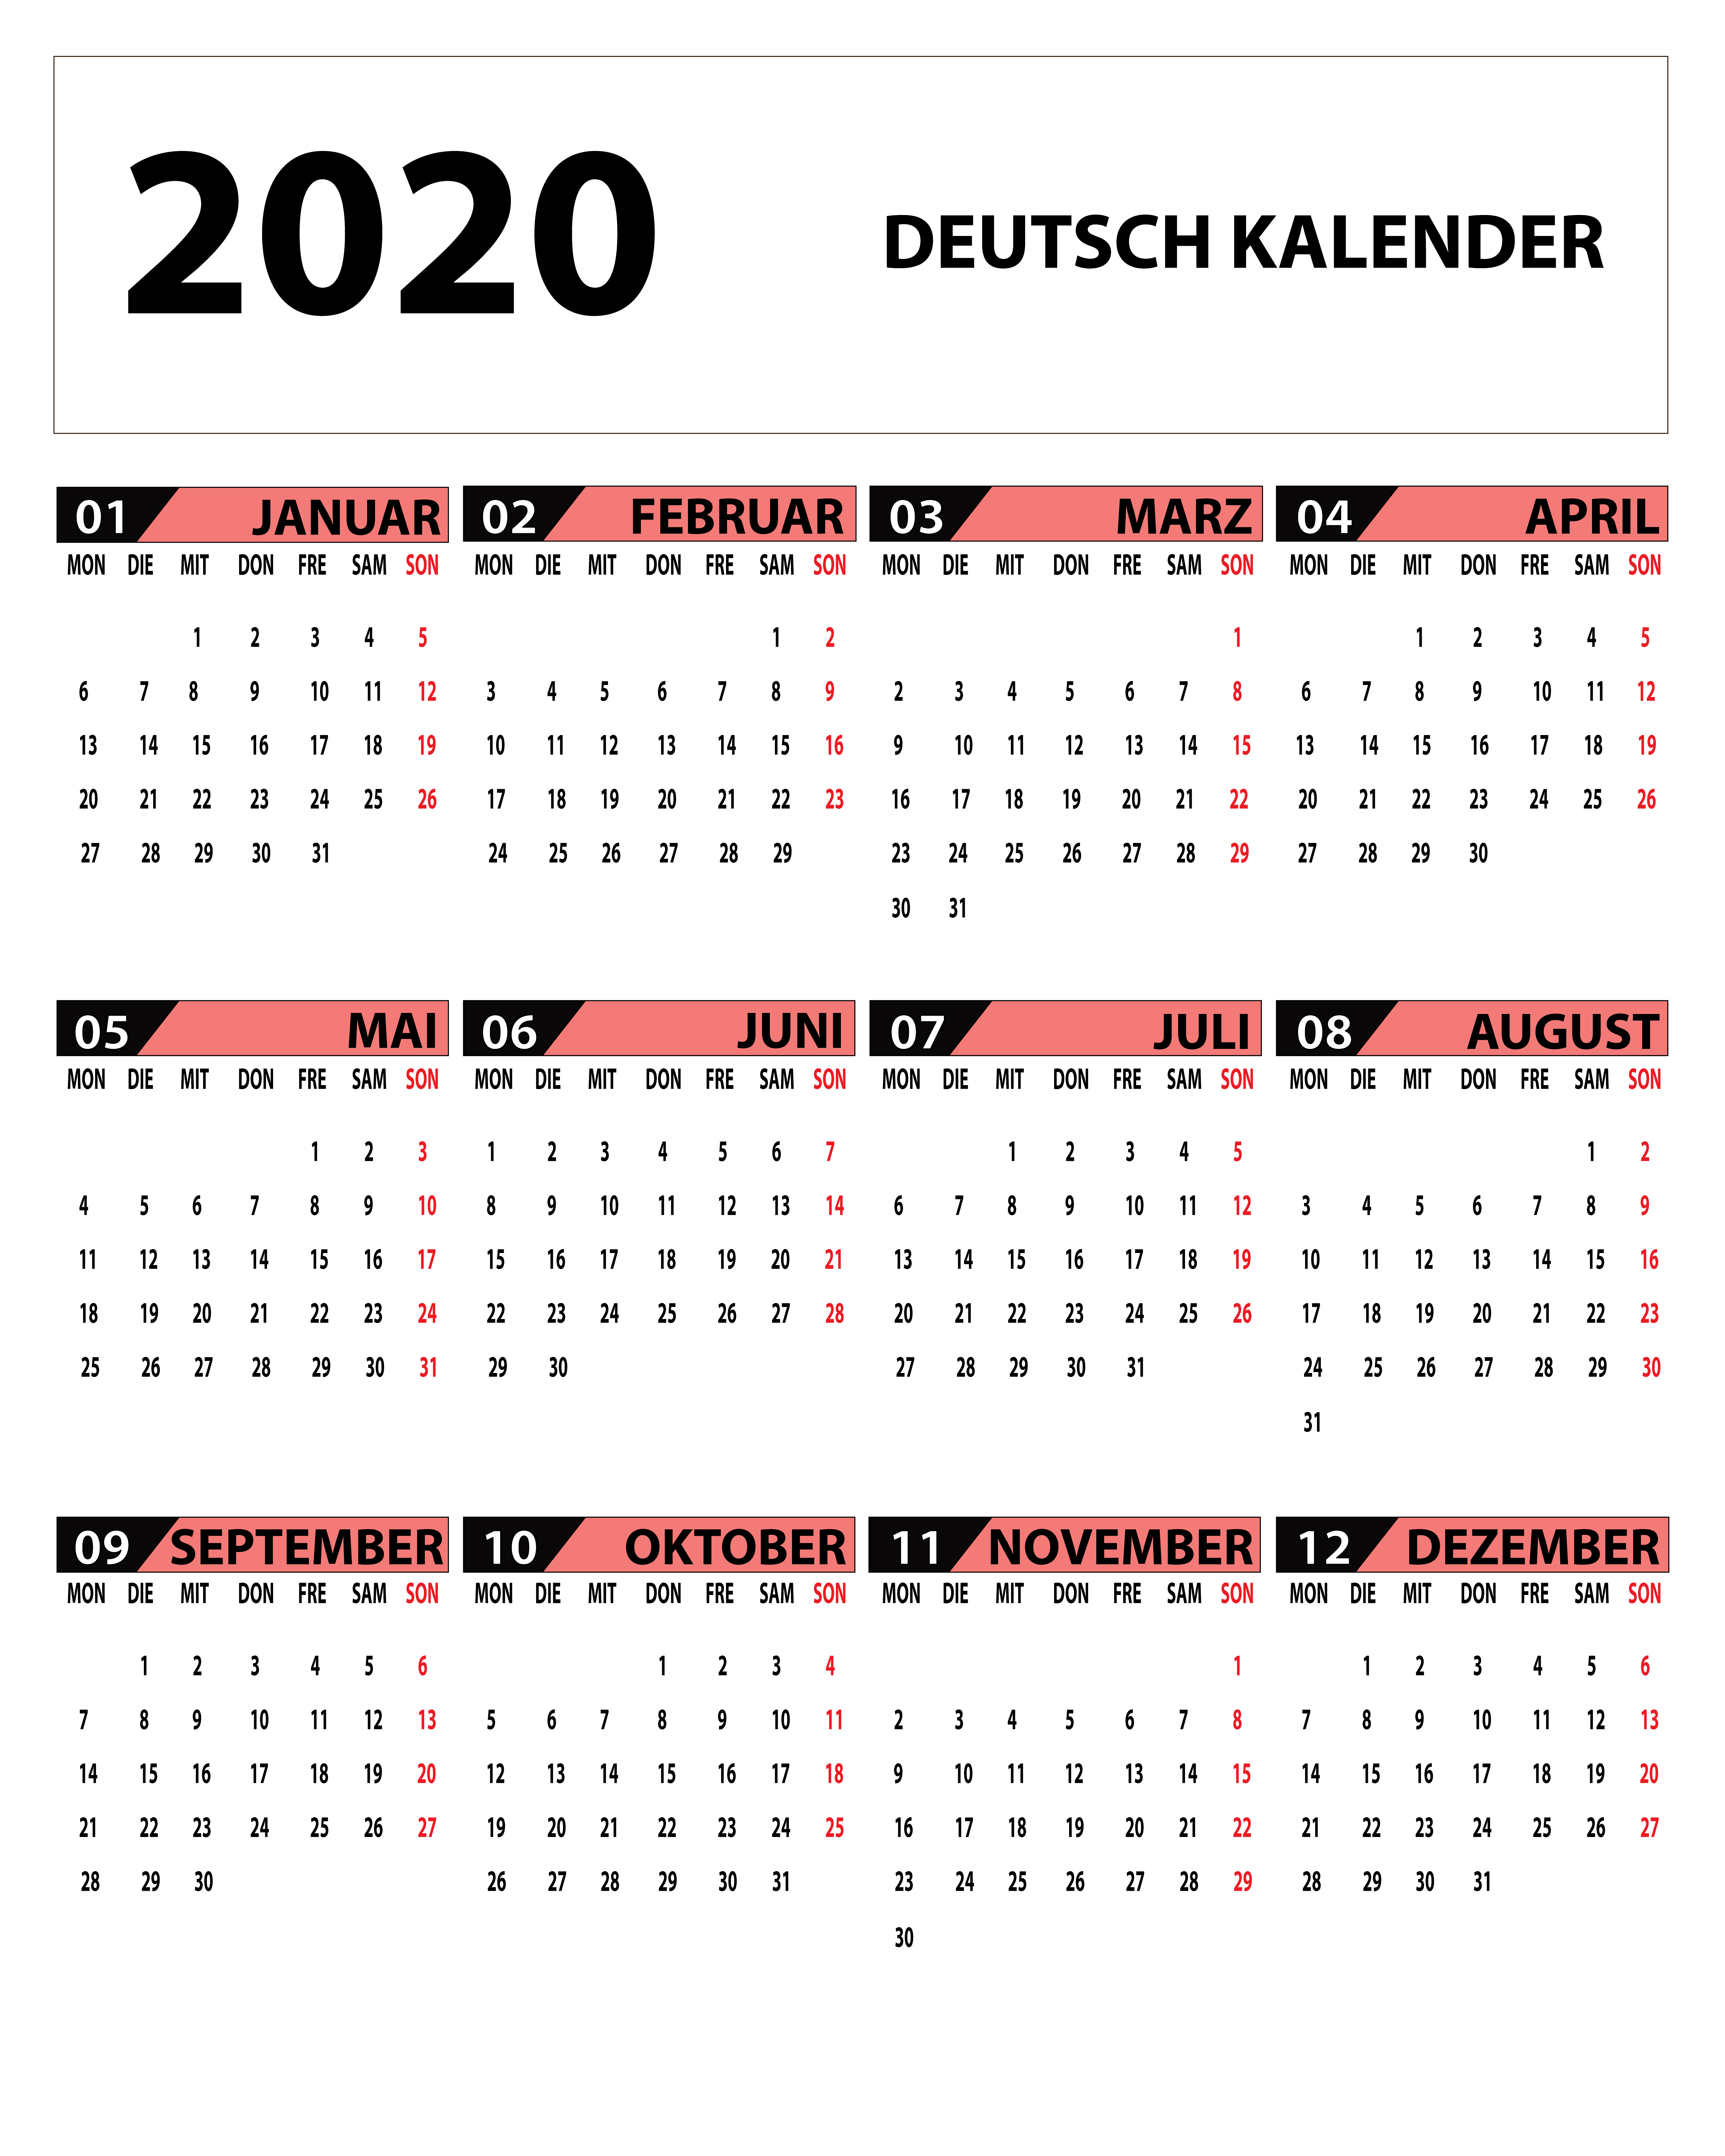 German Calendar 2020 | 2020 Kalender | Calendar Top